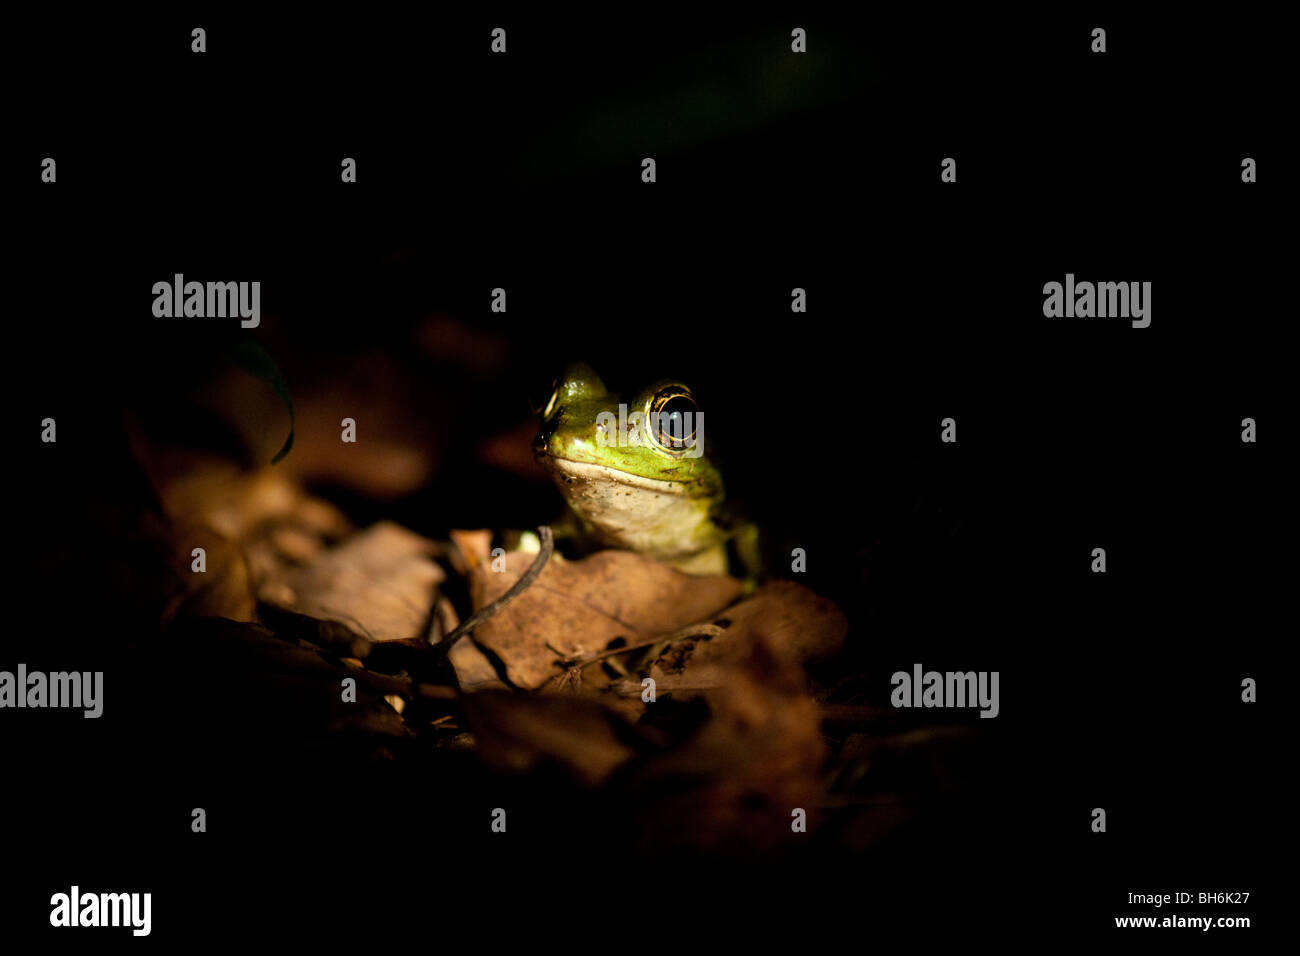 Red eyed treefrog in the Frog Pond in Ranario, Santa Elena, Costa Rica Stock Photo